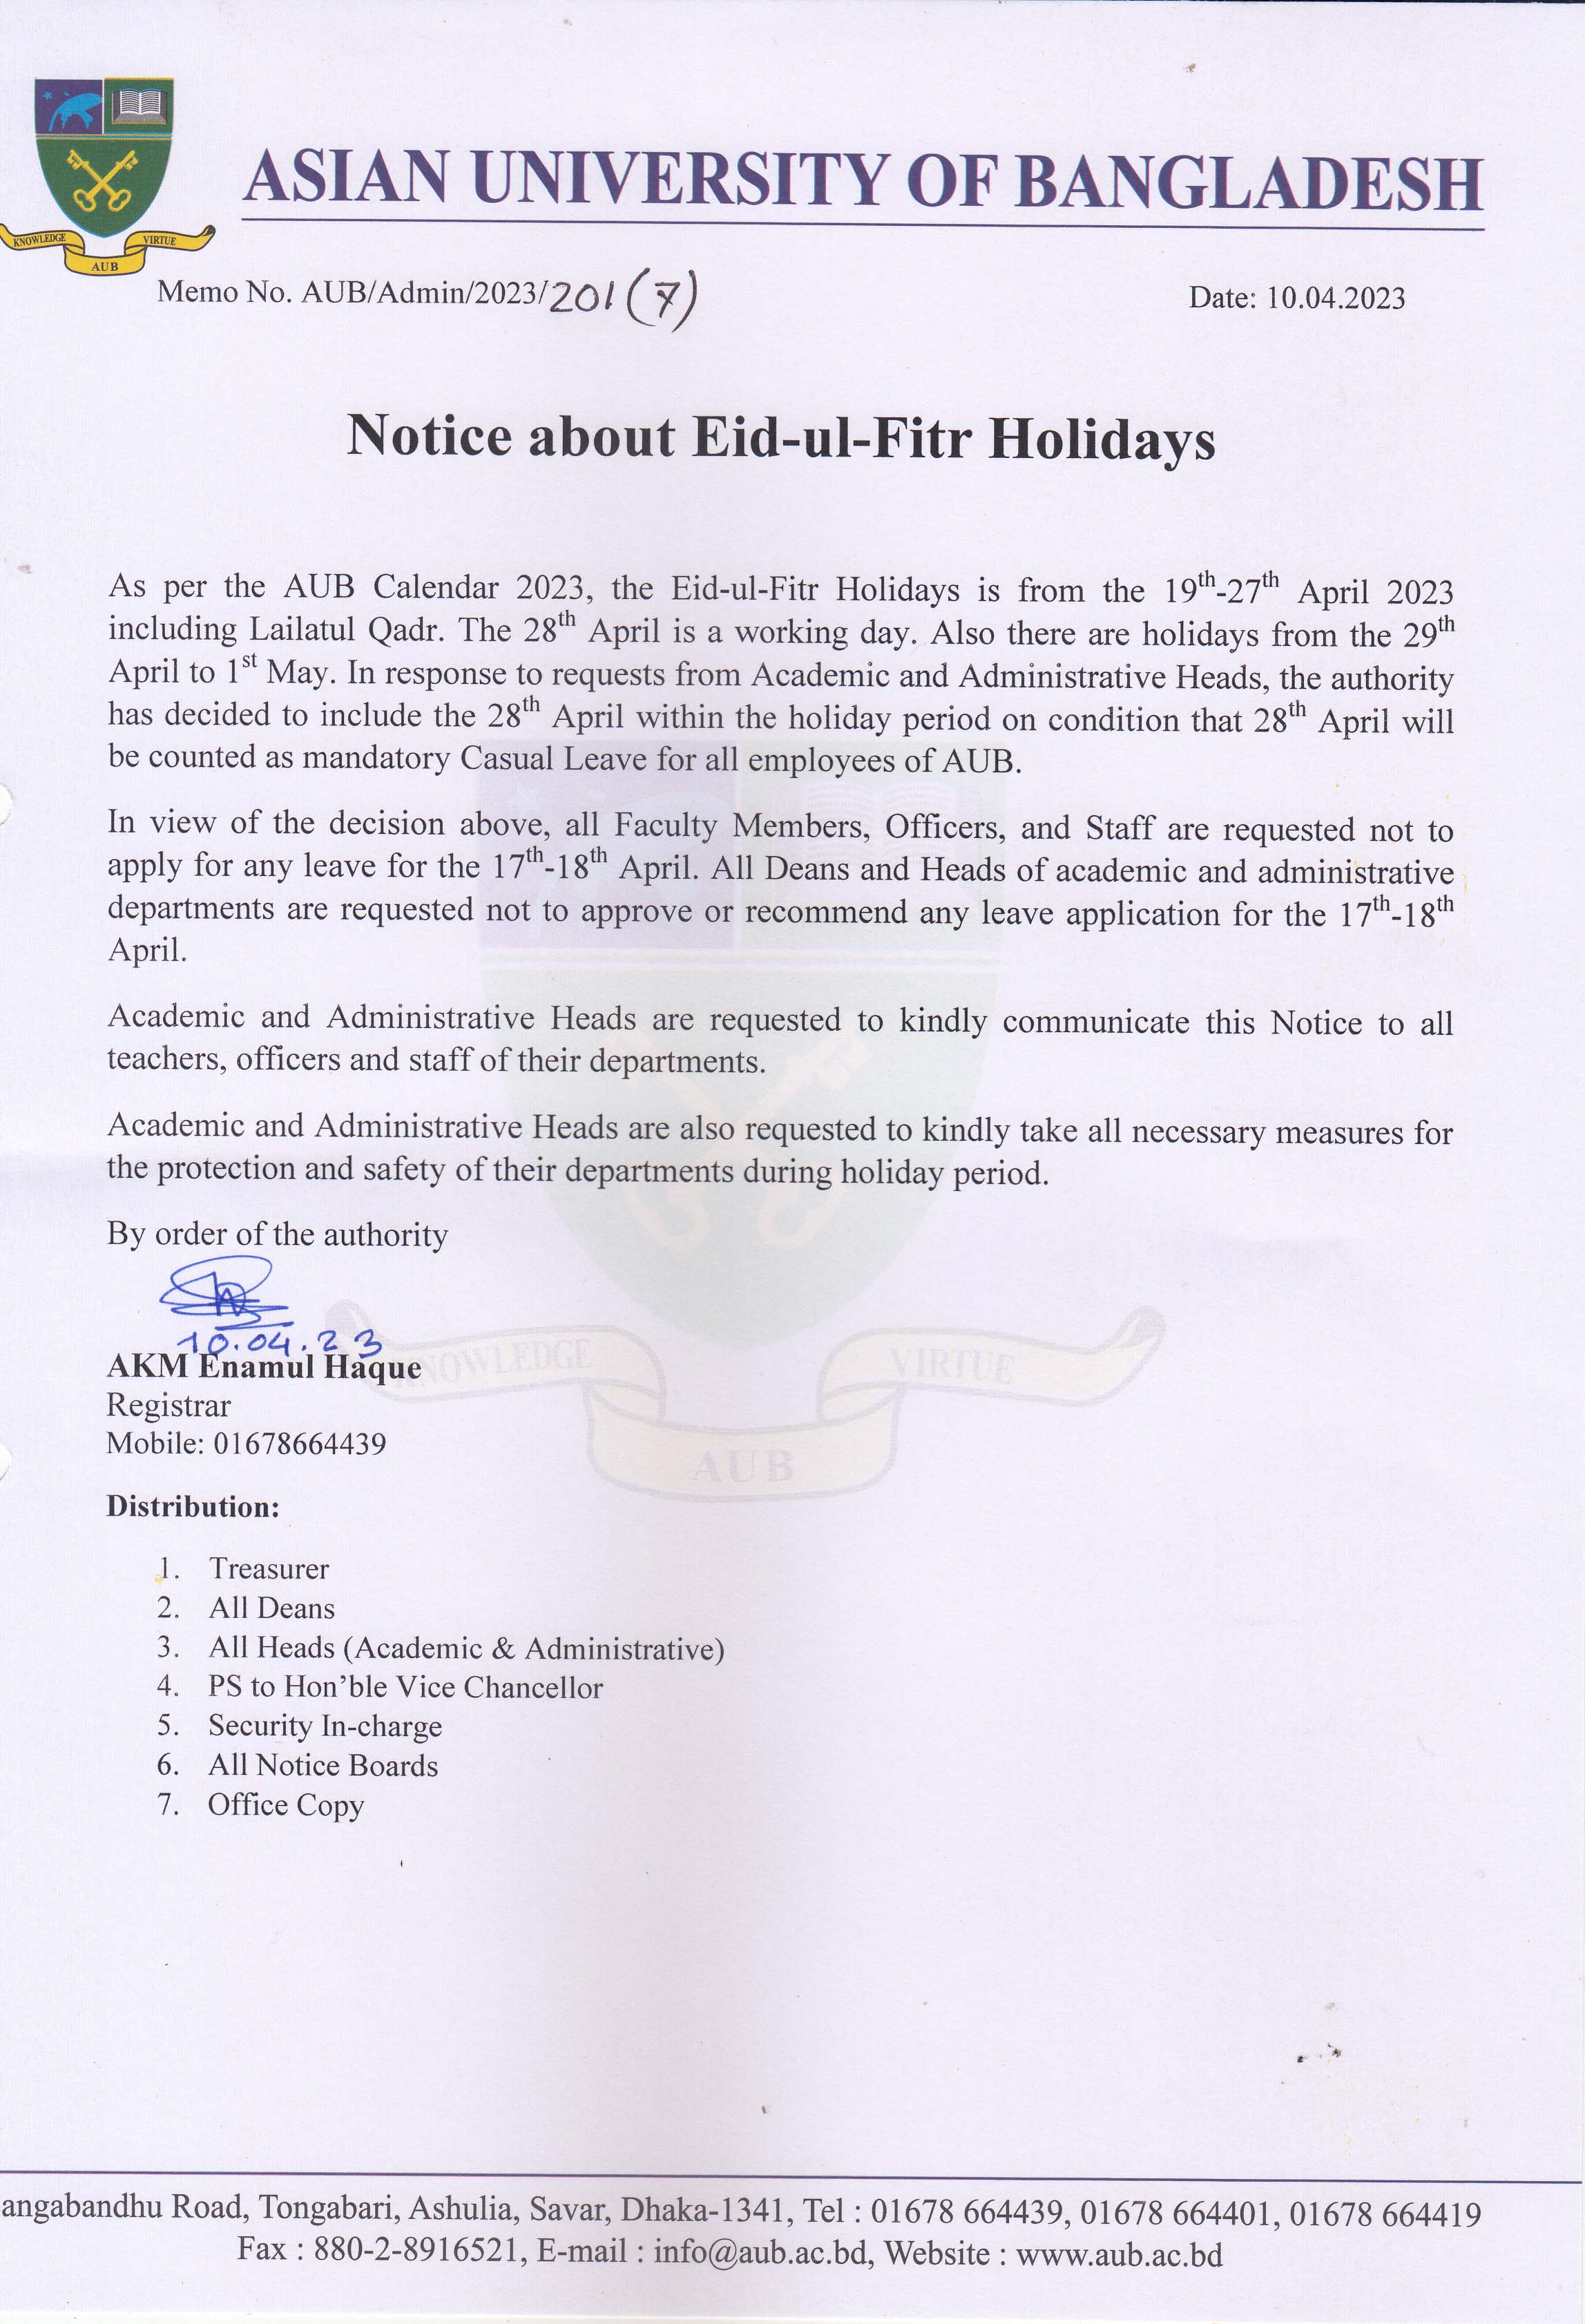 Eid Ul Fitr 2023 Holiday Notice image